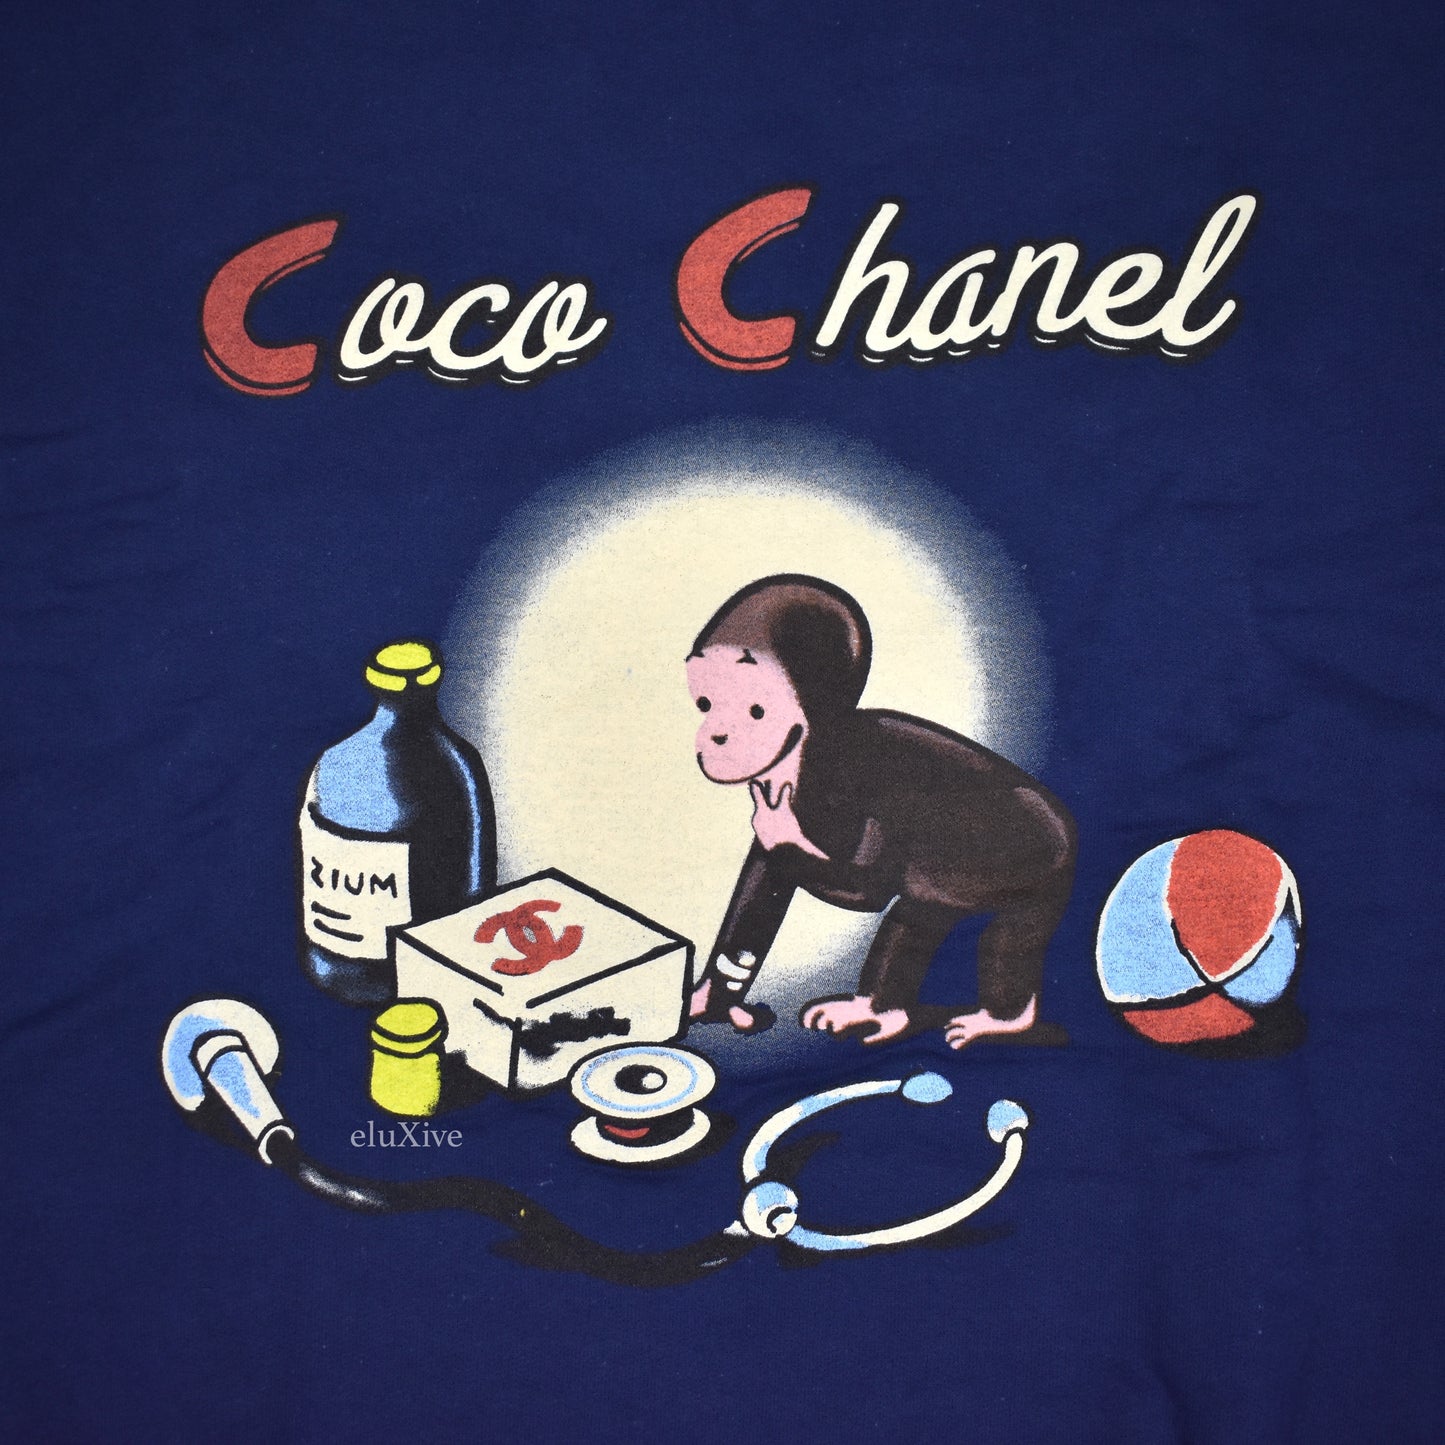 Mega Yacht - 'Chanel' Logo Curious George Sweatshirt